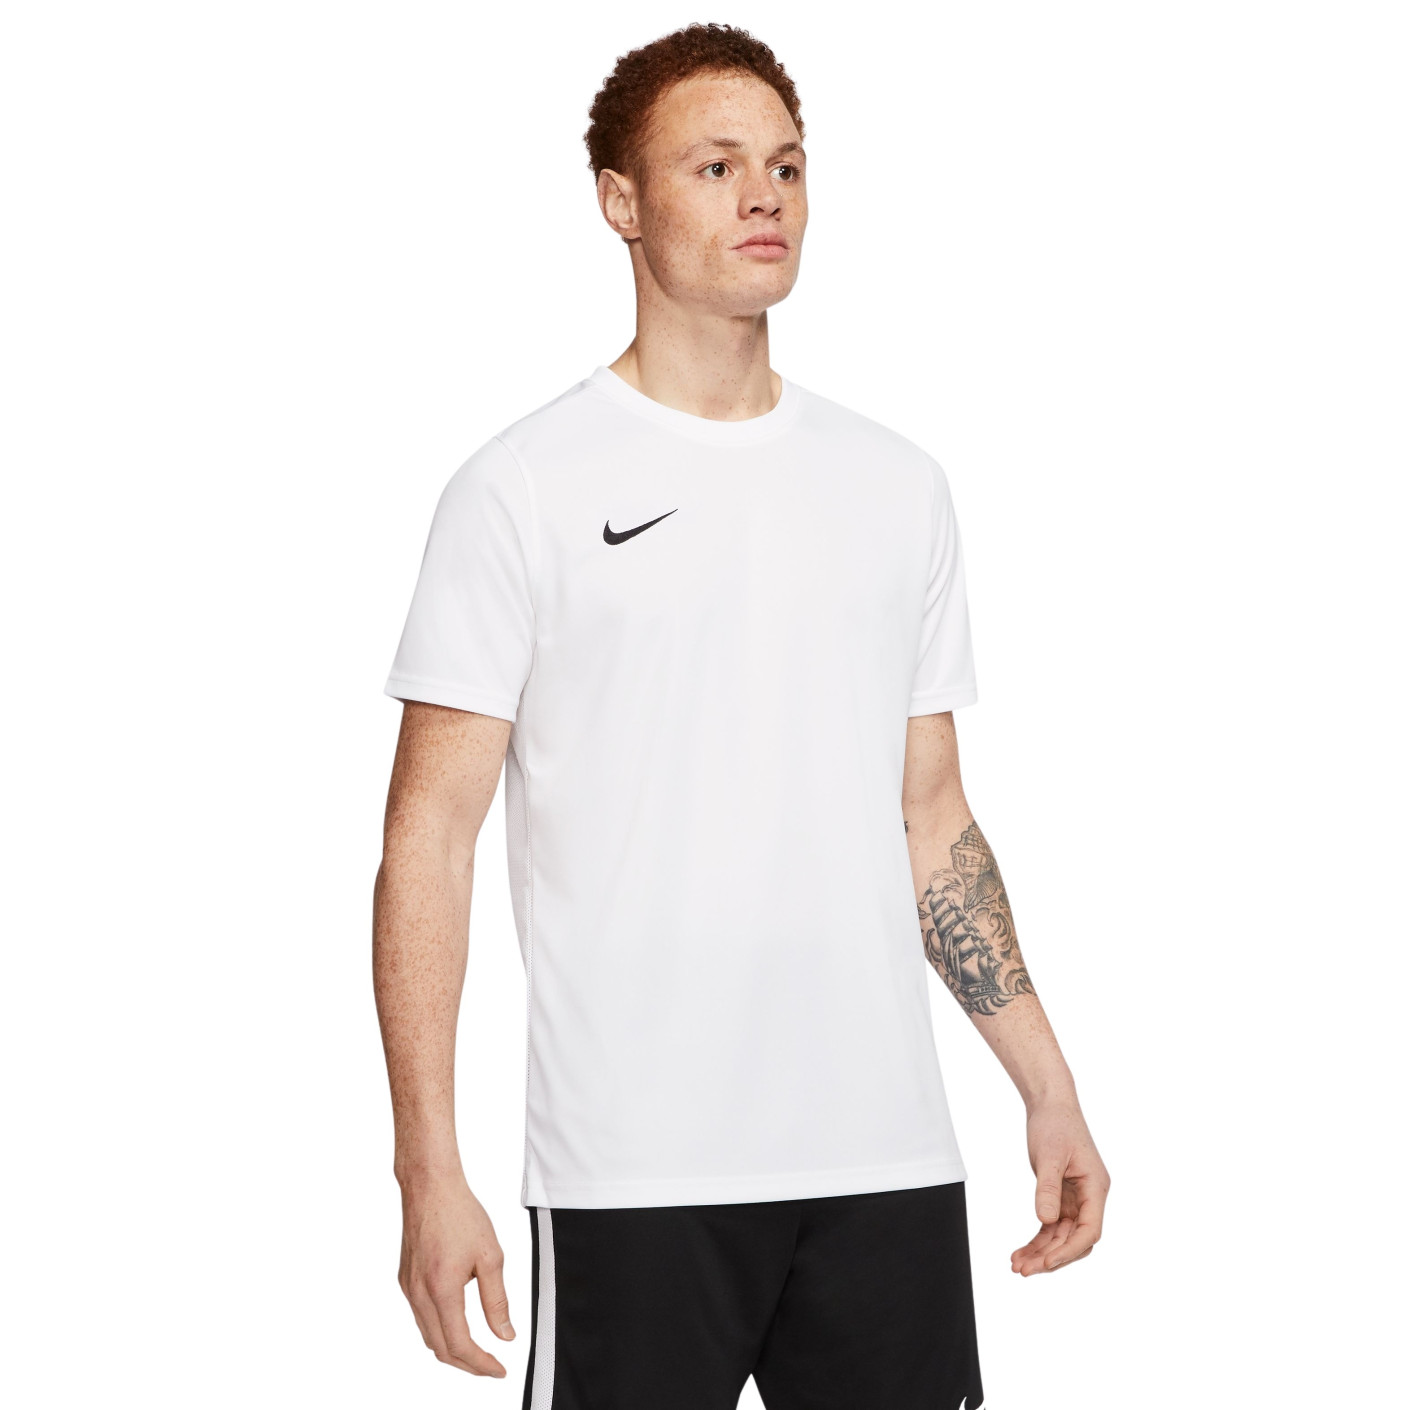 Nike Dry Park VII Voetbalshirt Wit